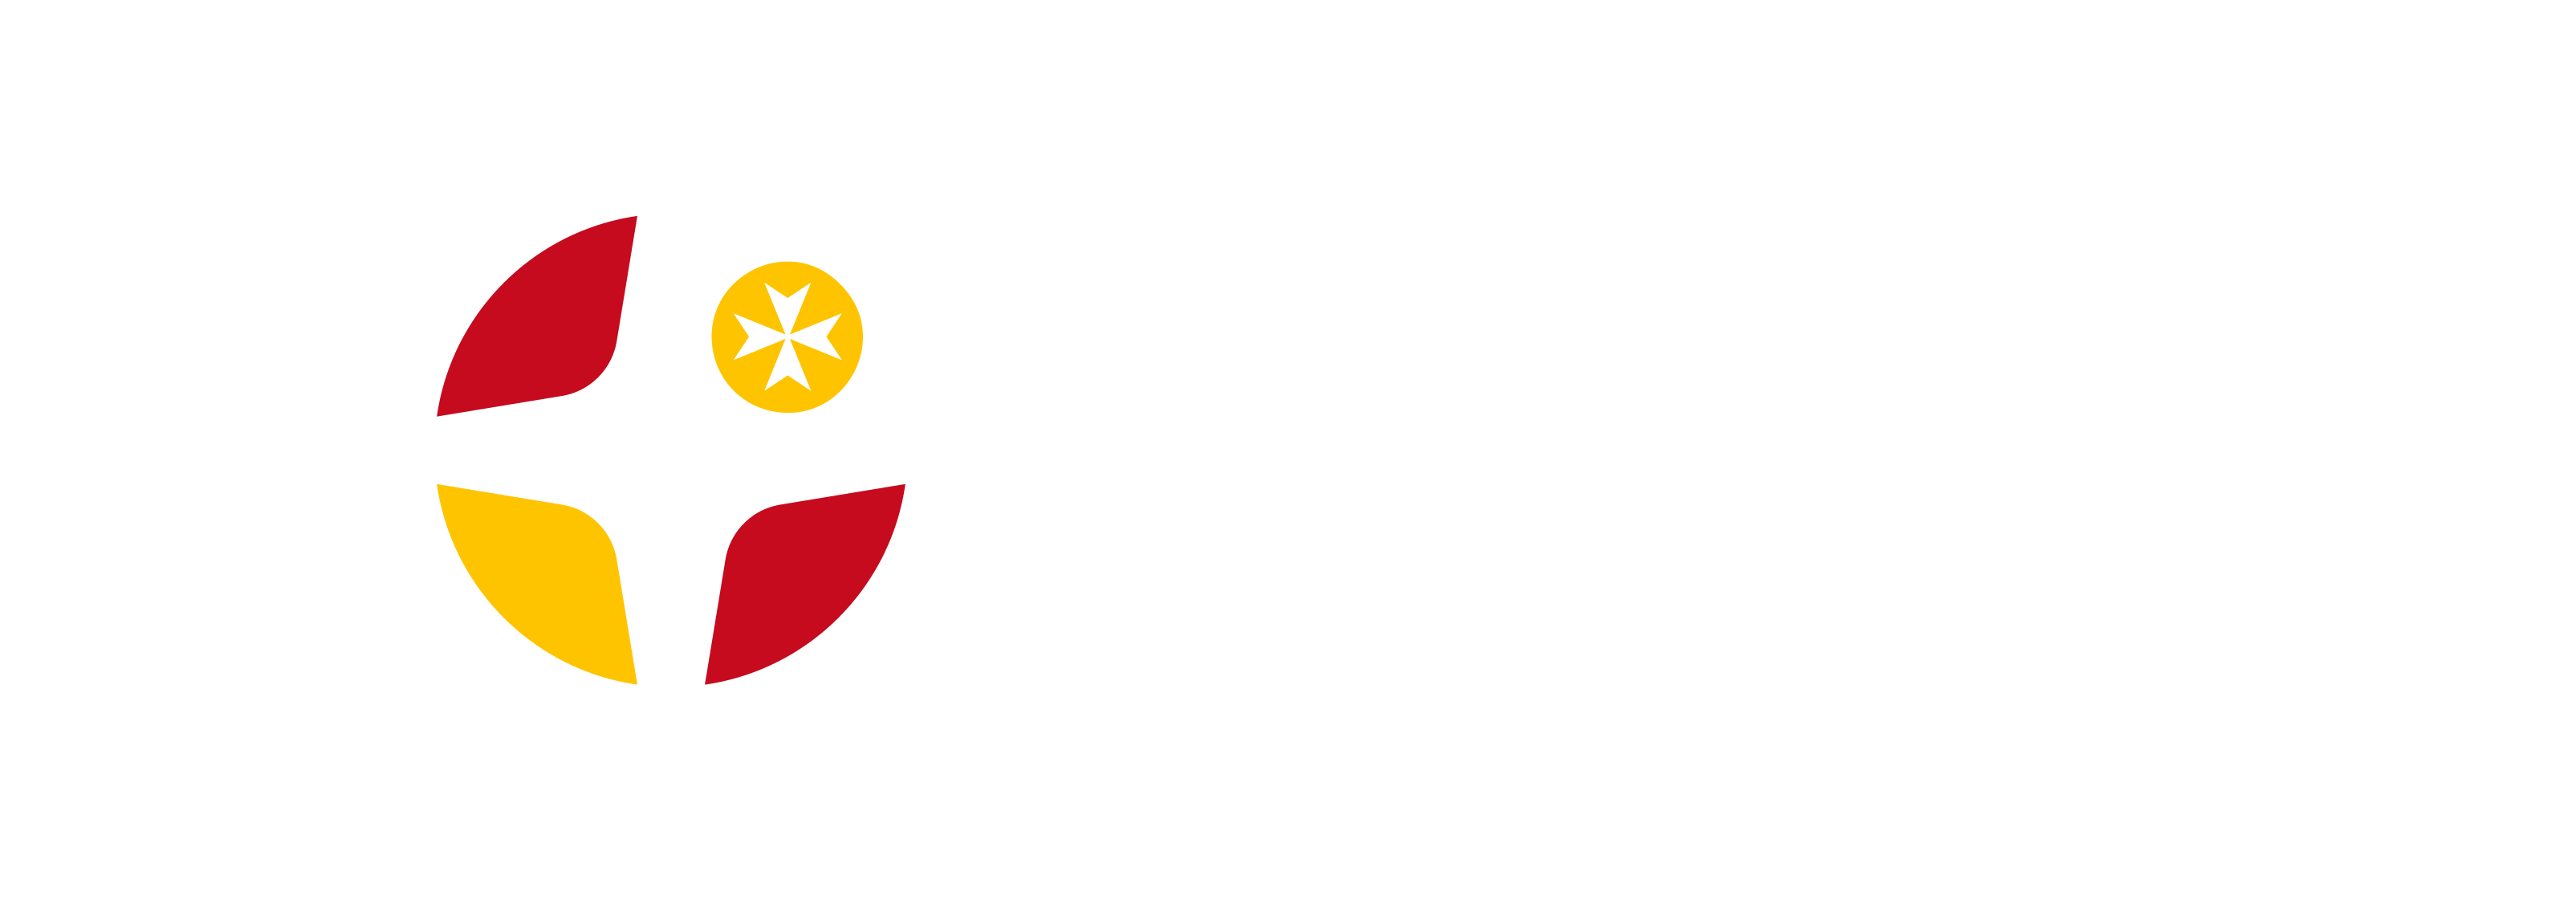 MC_logos_espanoles_complet-13